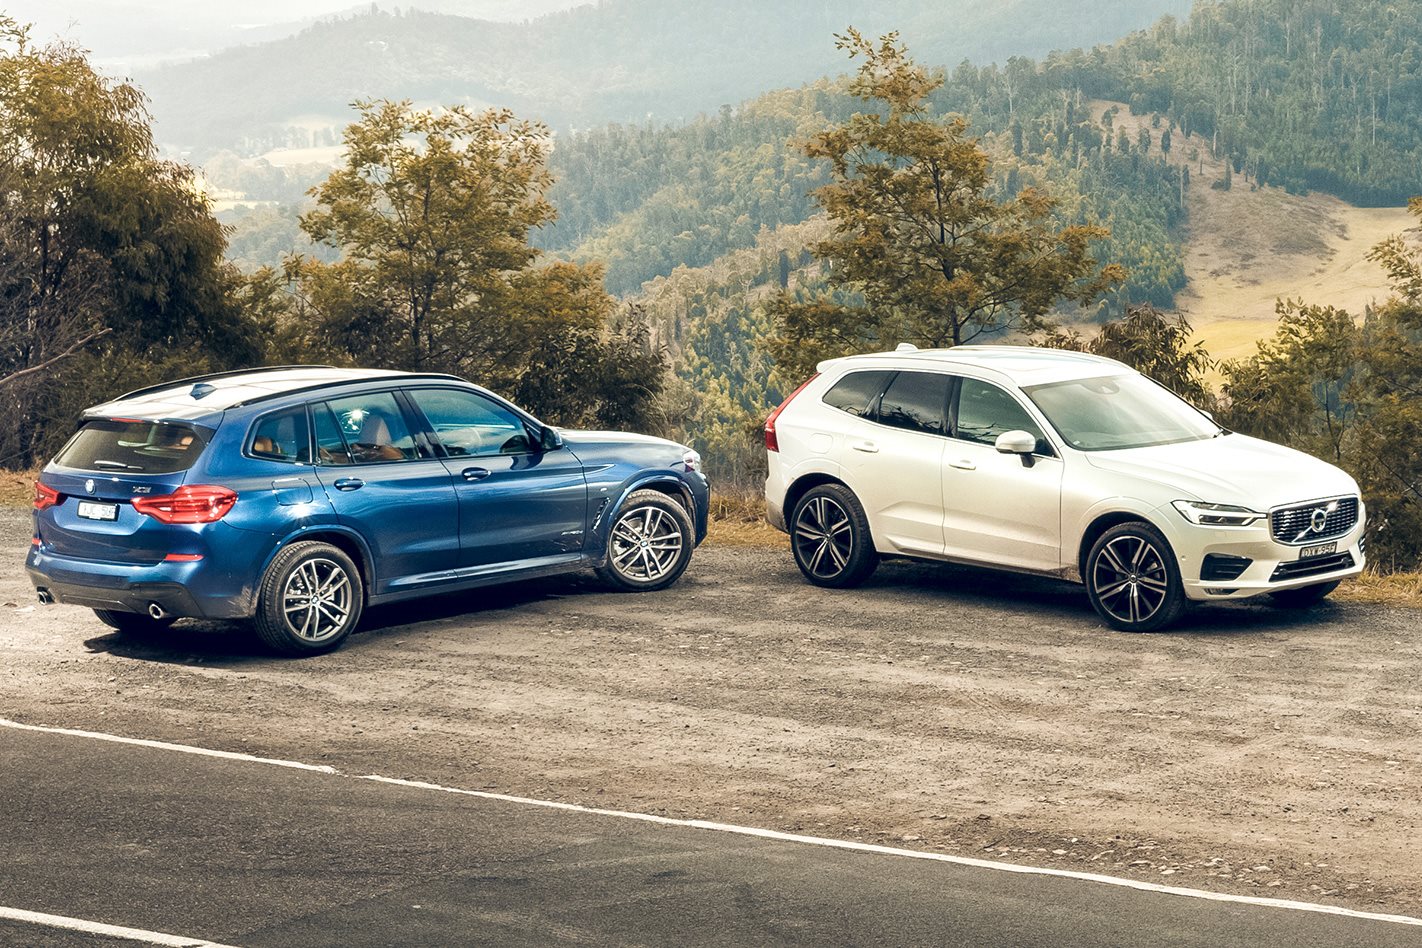 2018 BMW X3 xDrive20d v Volvo XC60 D5 RDesign comparison